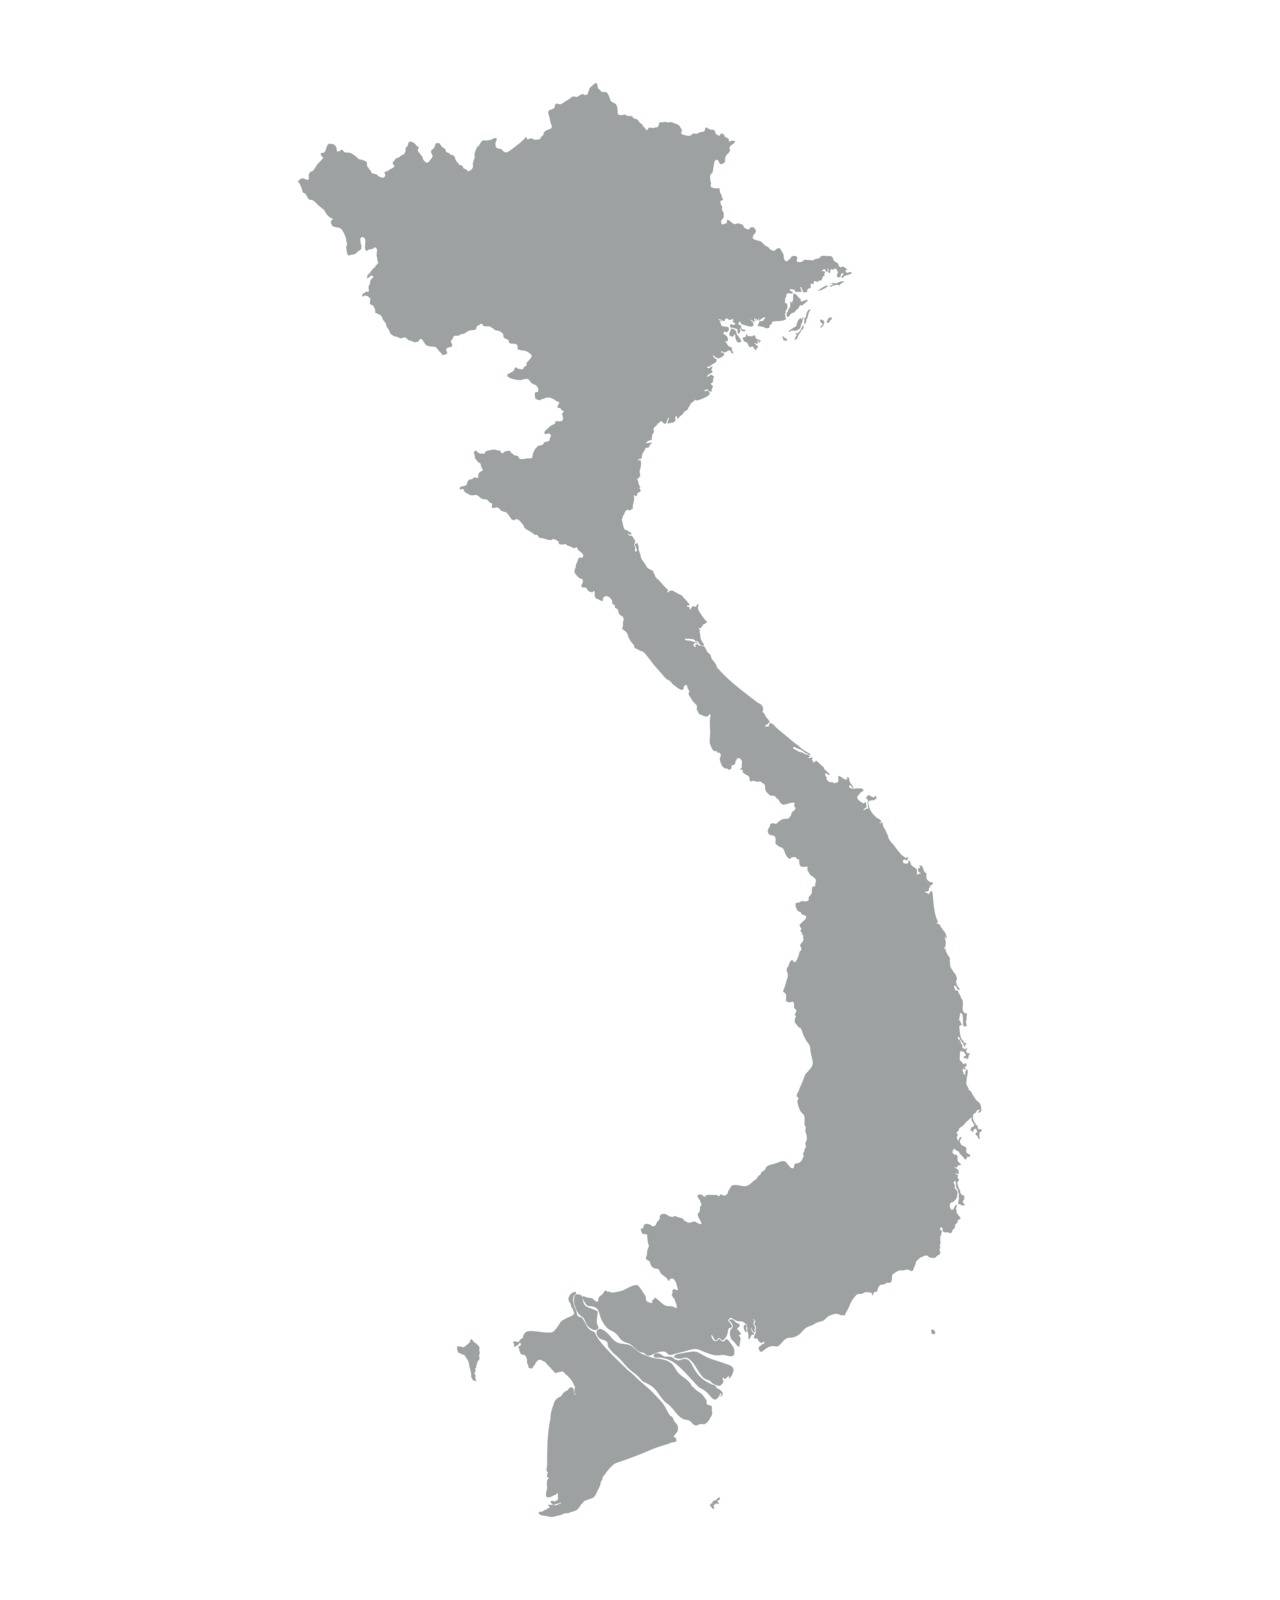 Map of Vietnam by rbiedermann